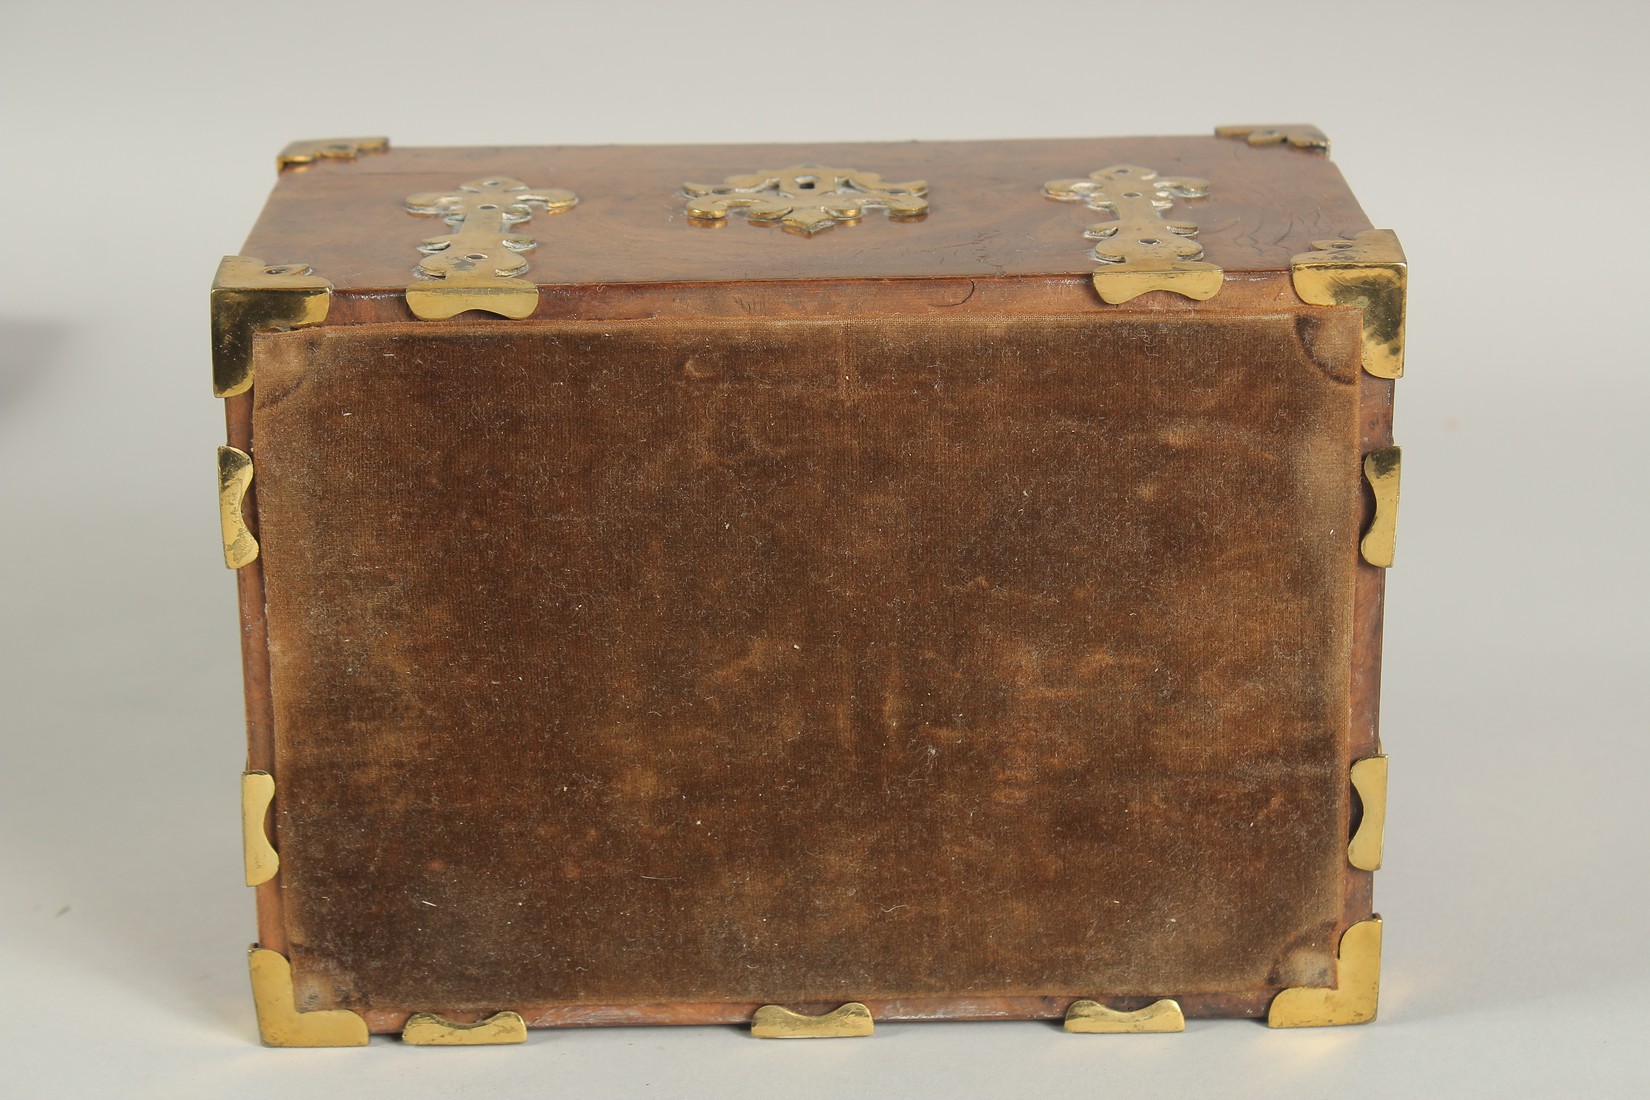 A GOOD 19TH CENTURY FIGURED WALNUT BRASS BOUND CASKET with velvet interior. 8ins long. - Image 3 of 3